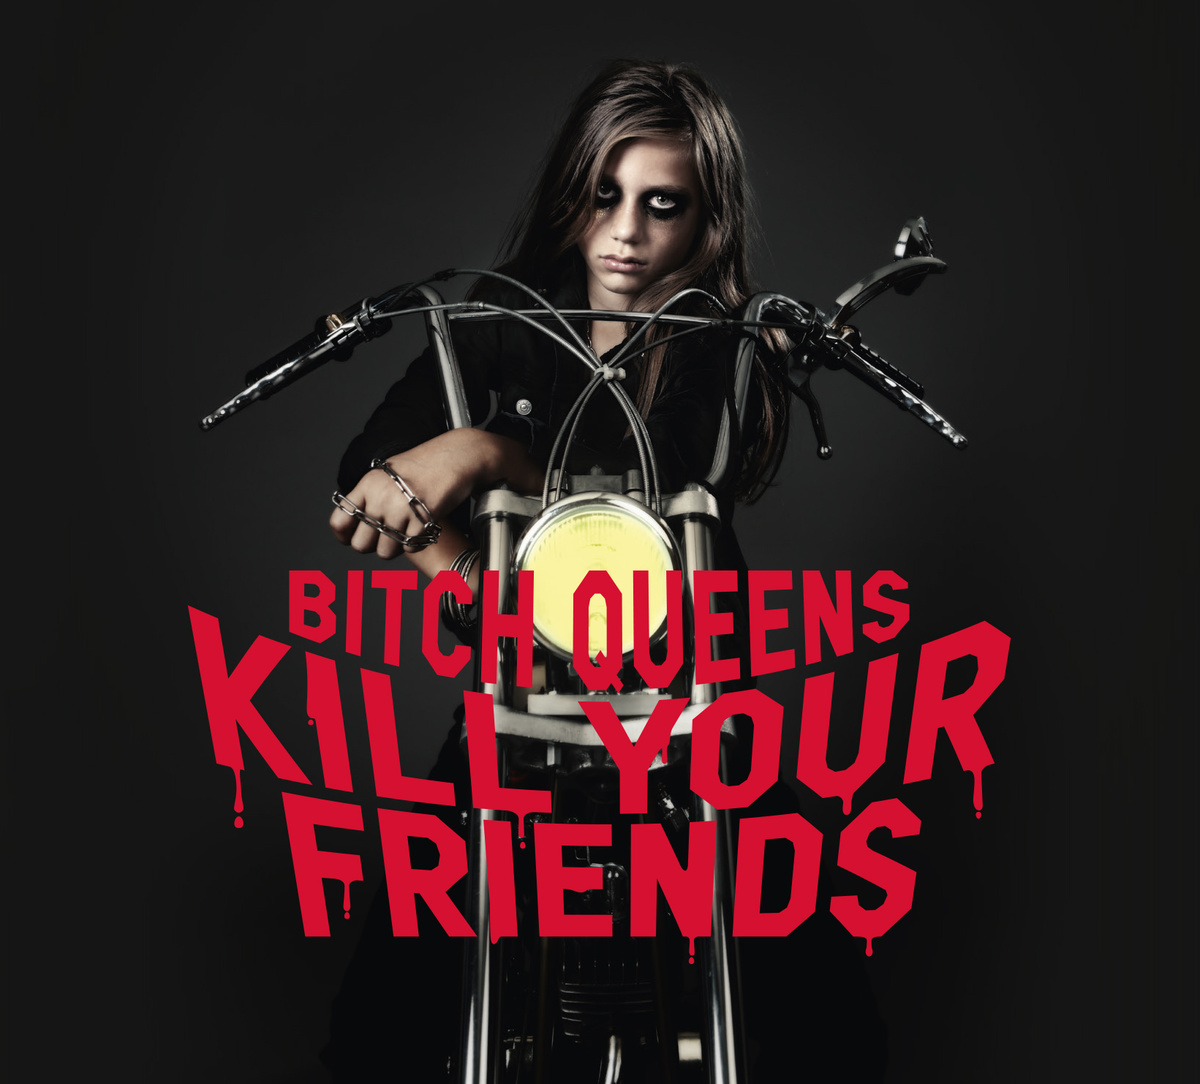 Kill queen. Queen bitch. Kill all your friends альбом. Купи Queen Kill.